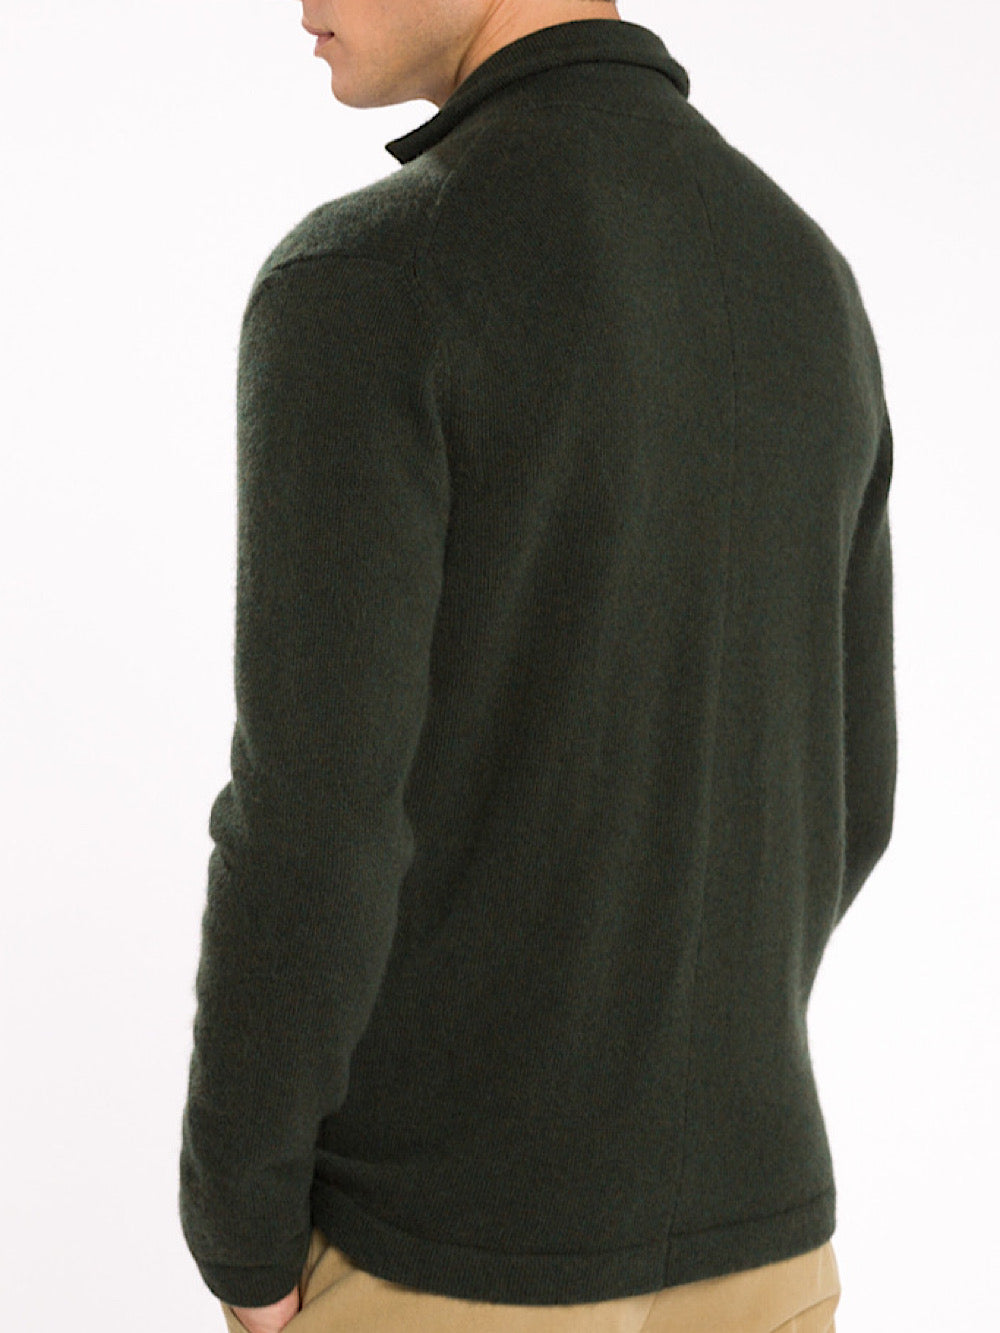 Boglioli Jacket Sweater in dark green virgin wool and cashmere